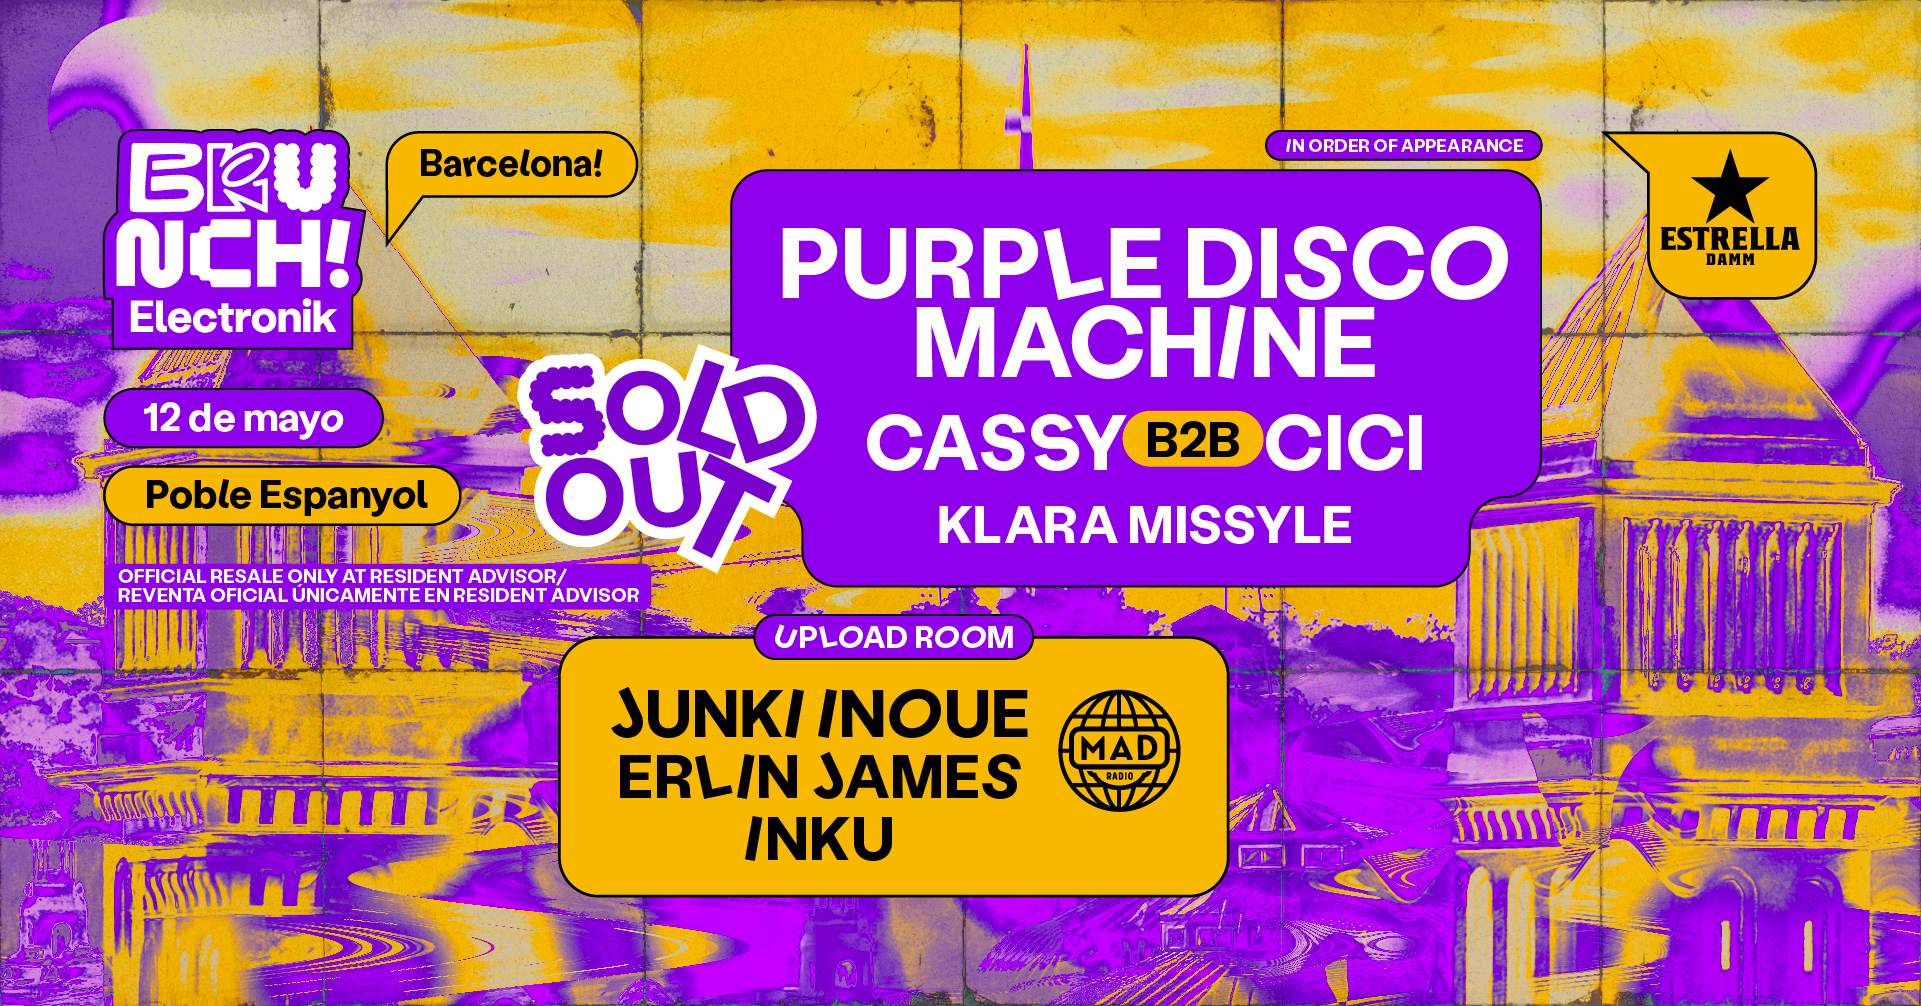 *SOLD OUT* Brunch Electronik Barcelona #7: Purple Disco Machine, Cassy b2b Cici y más - フライヤー裏